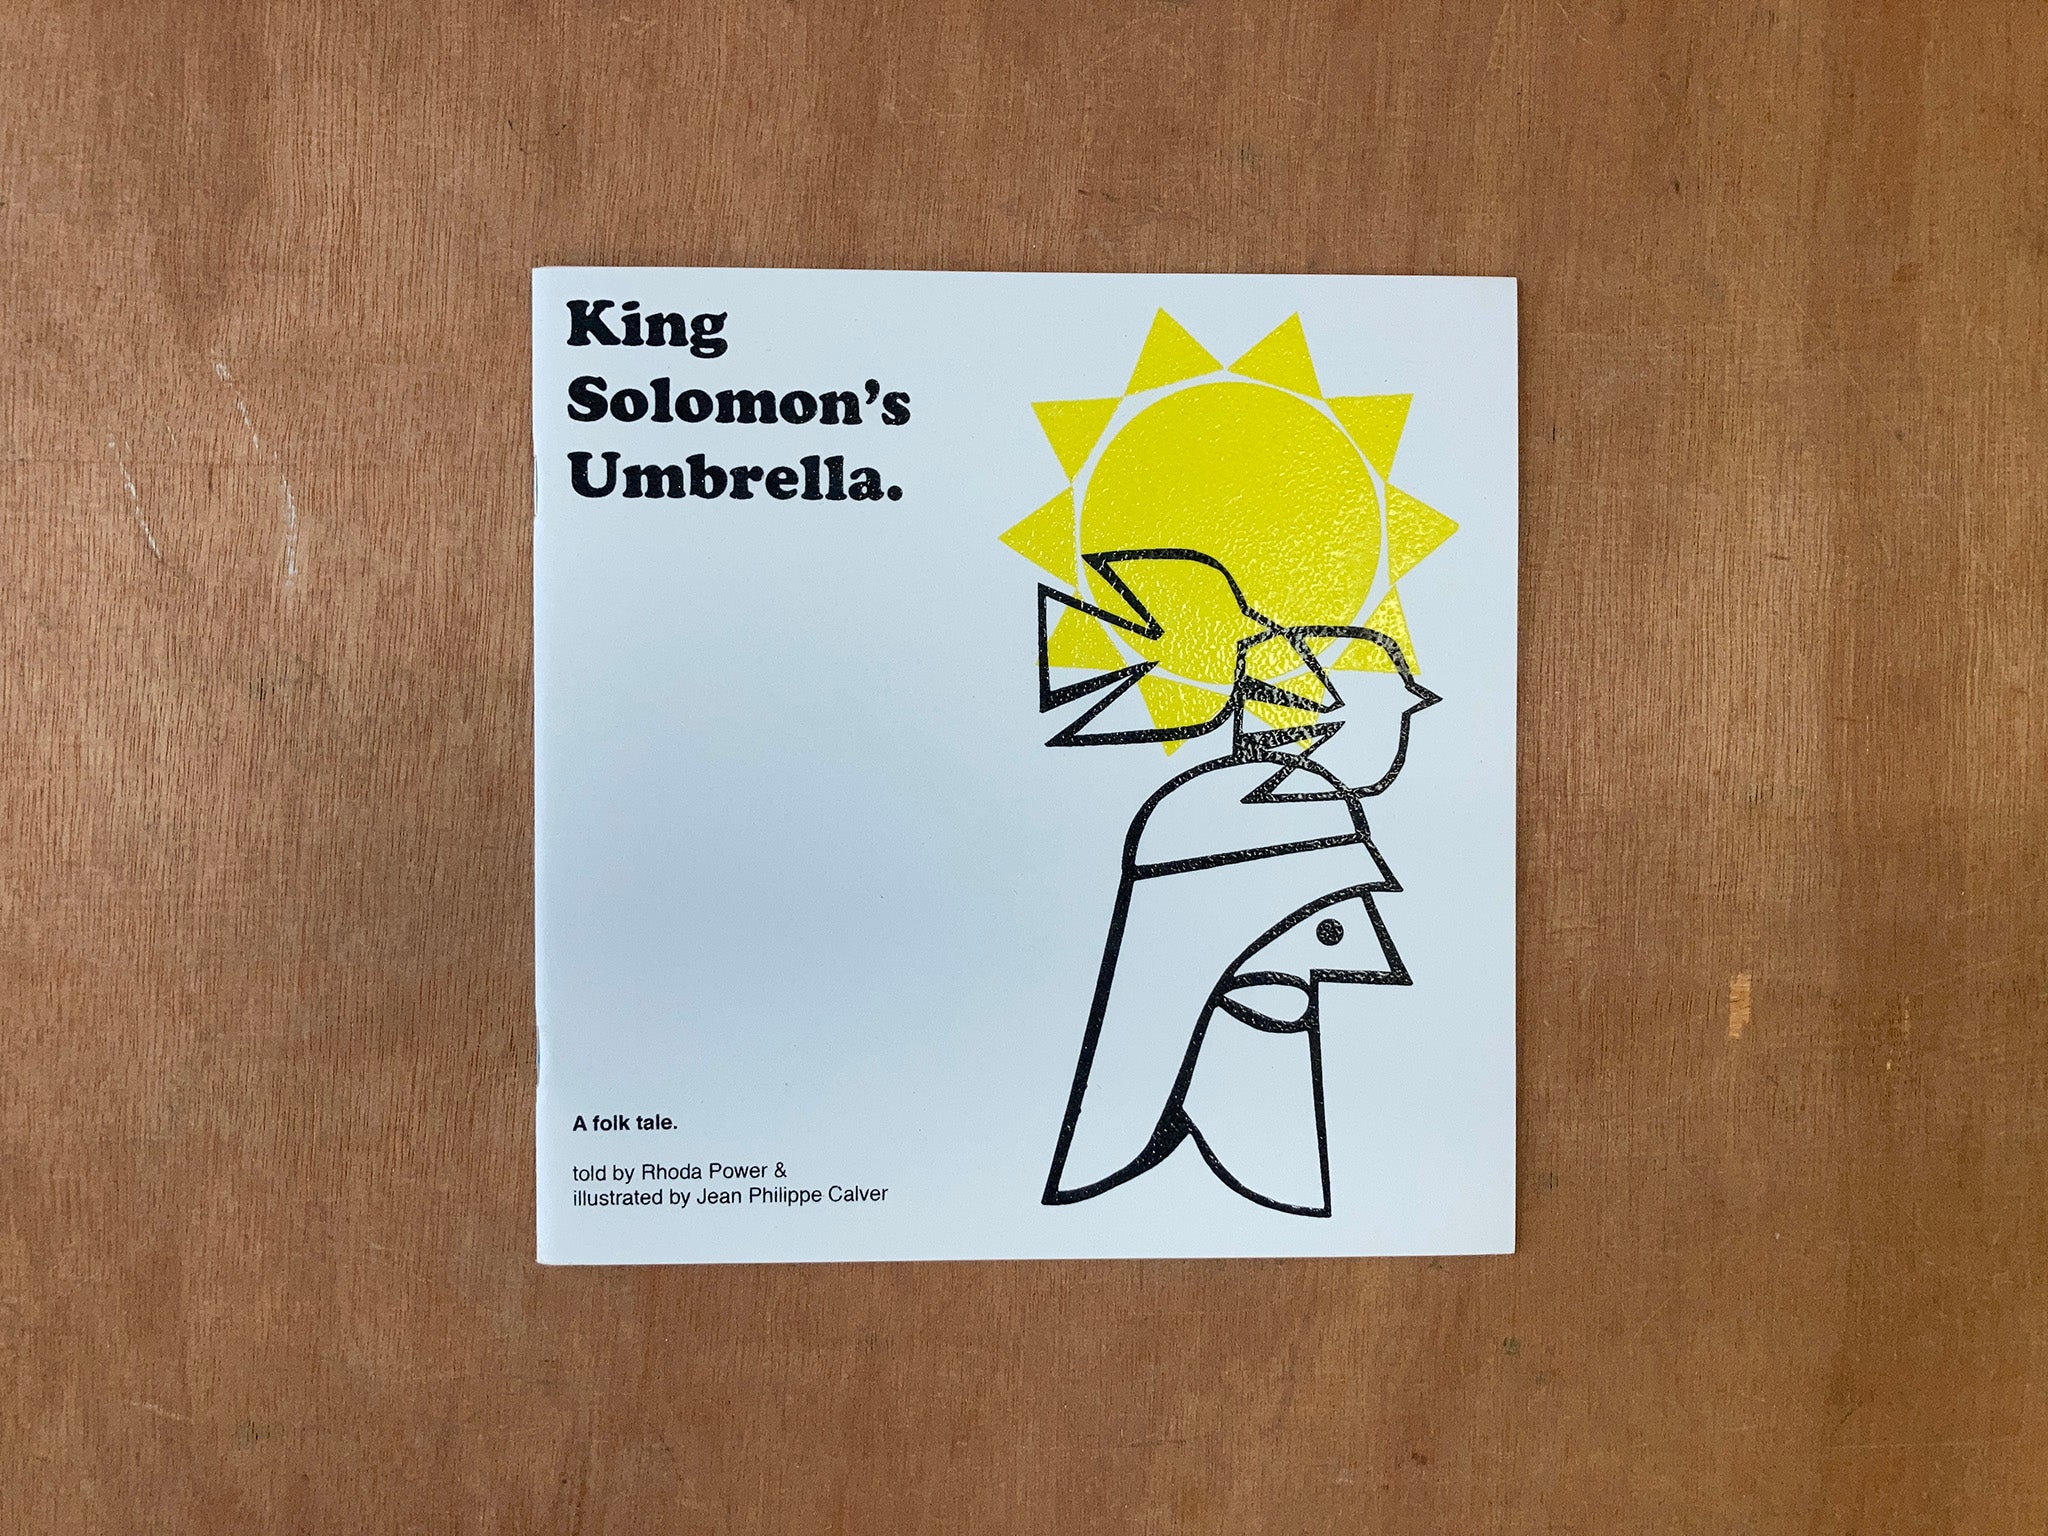 KING SOLOMON'S UMBRELLA by Jean Philippe Calver and Rhoda Power